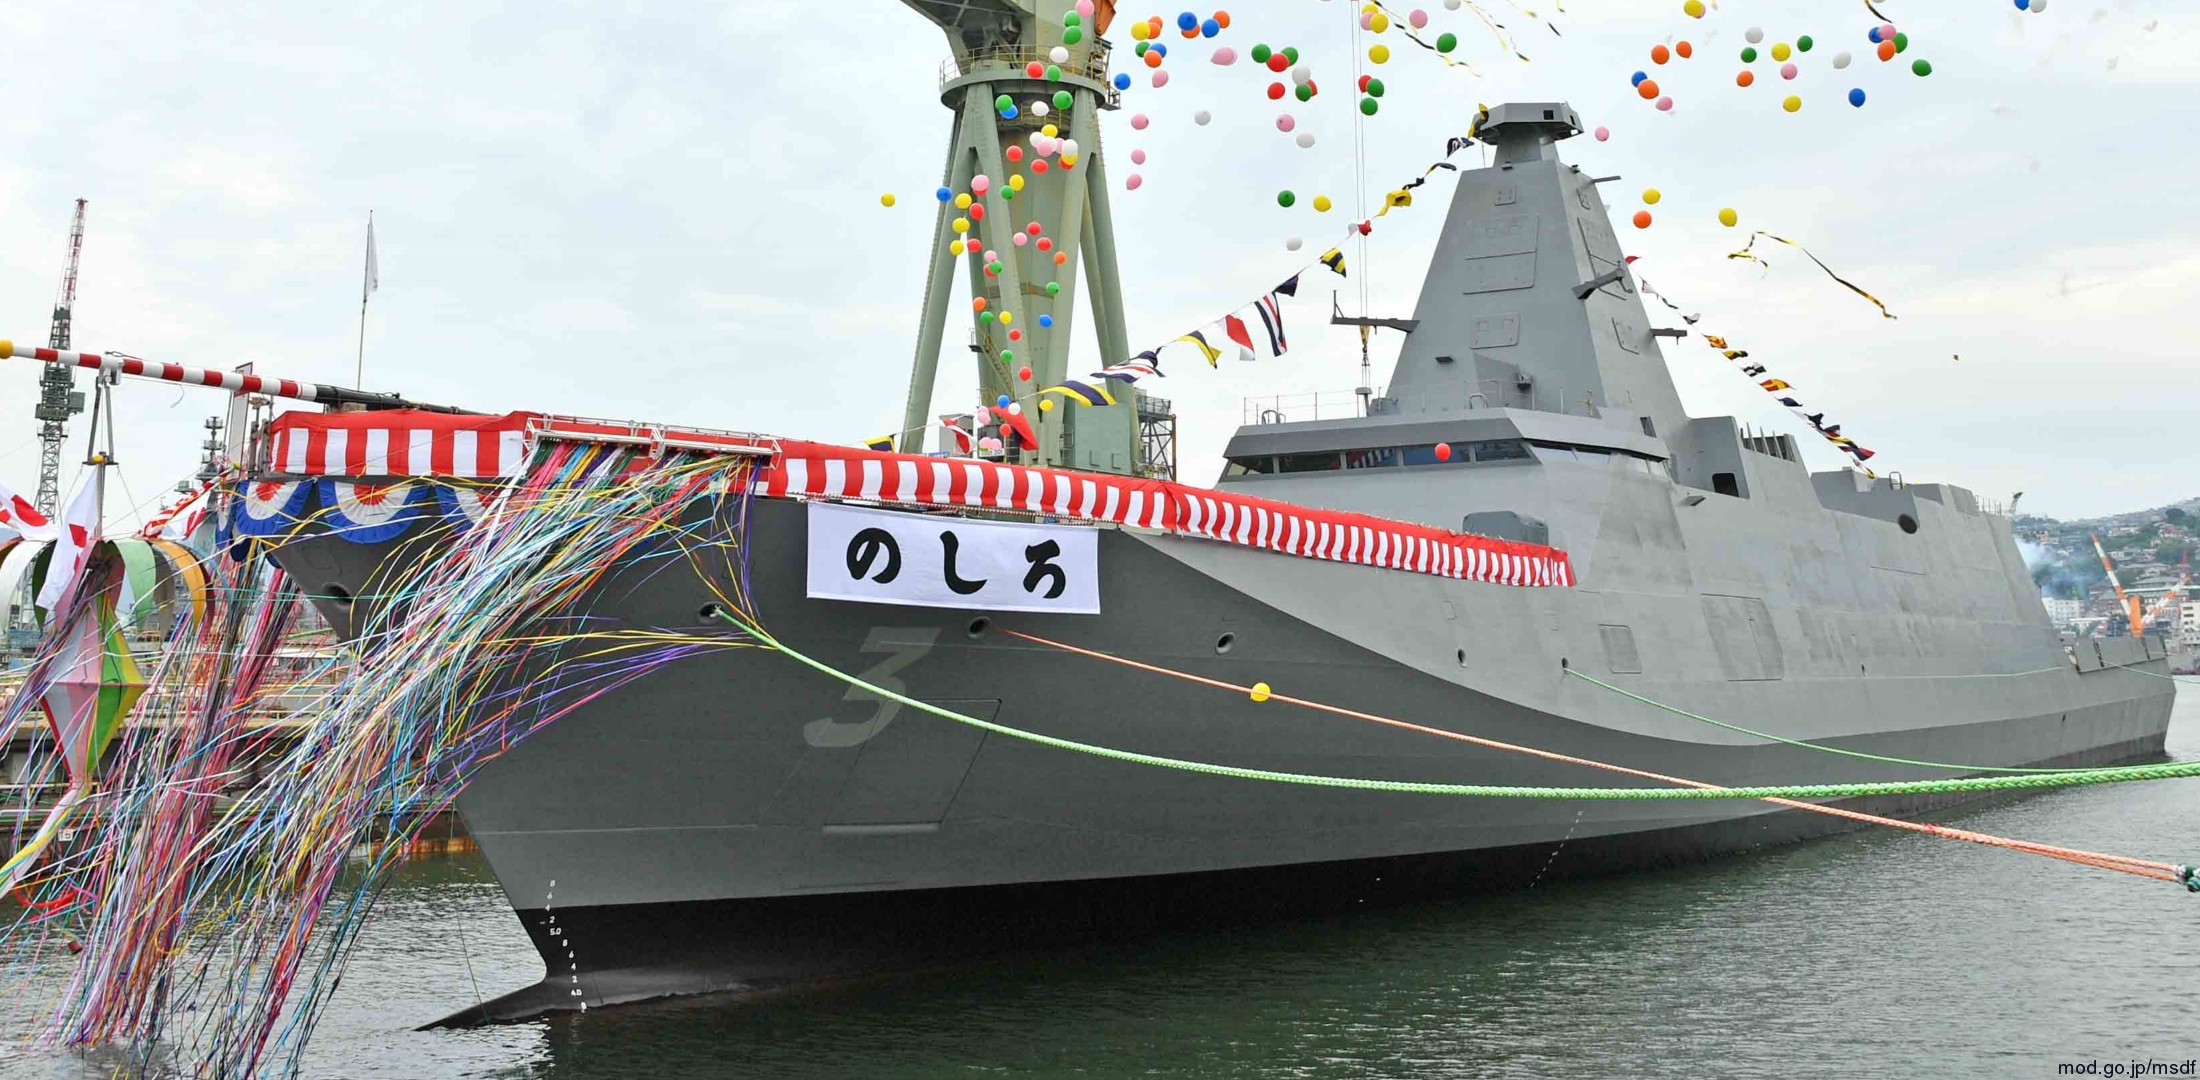 ffm-3 js noshiro mogami class frigate multi-mission japan maritime self defense force jmsdf navy 04x mitsubishi